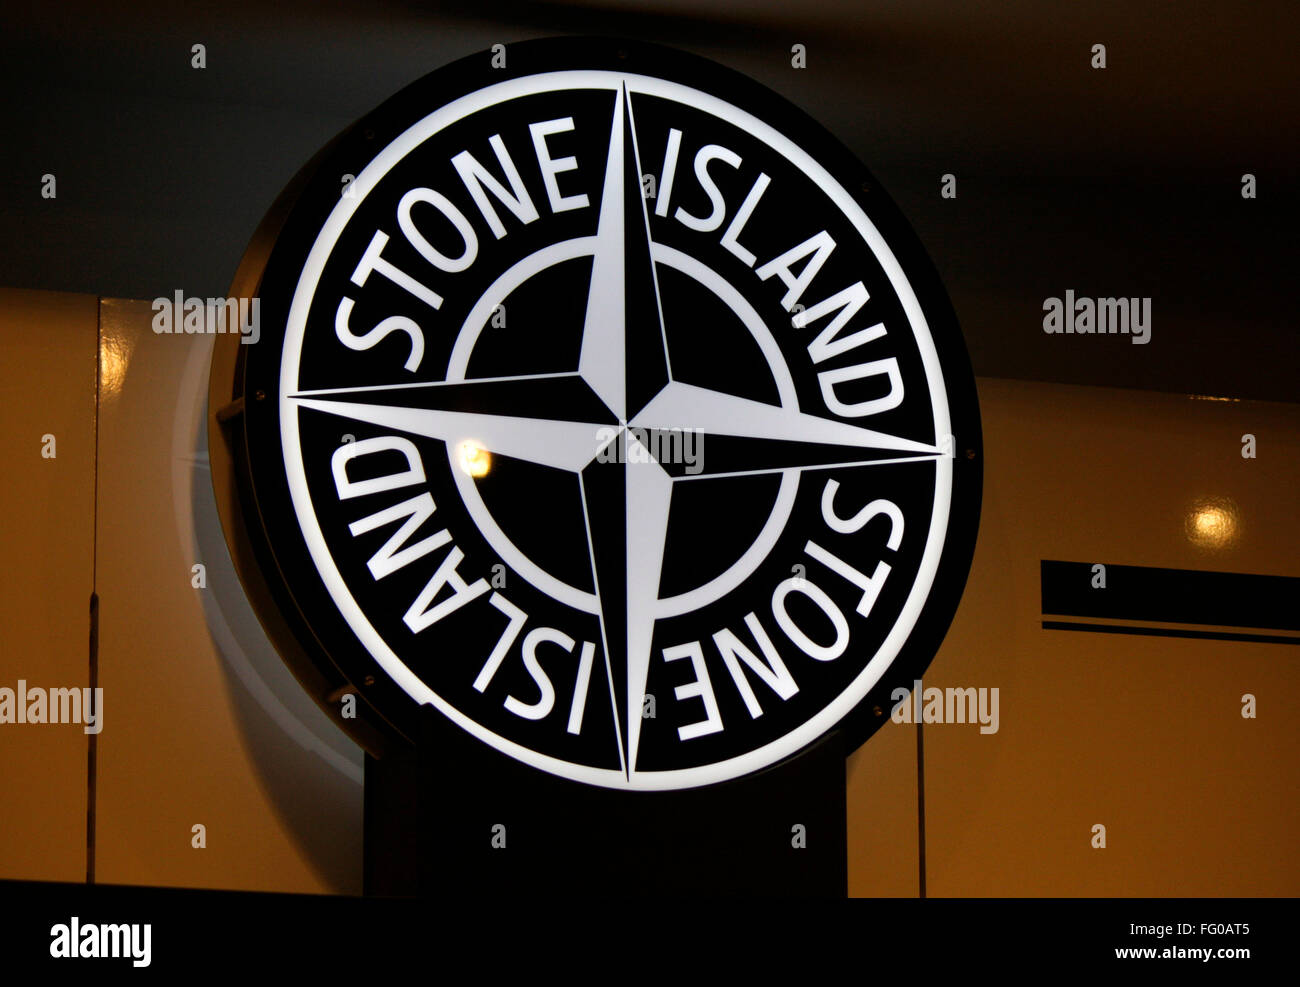 Markenname: "Stone Island", Berlin Stock Photo - Alamy